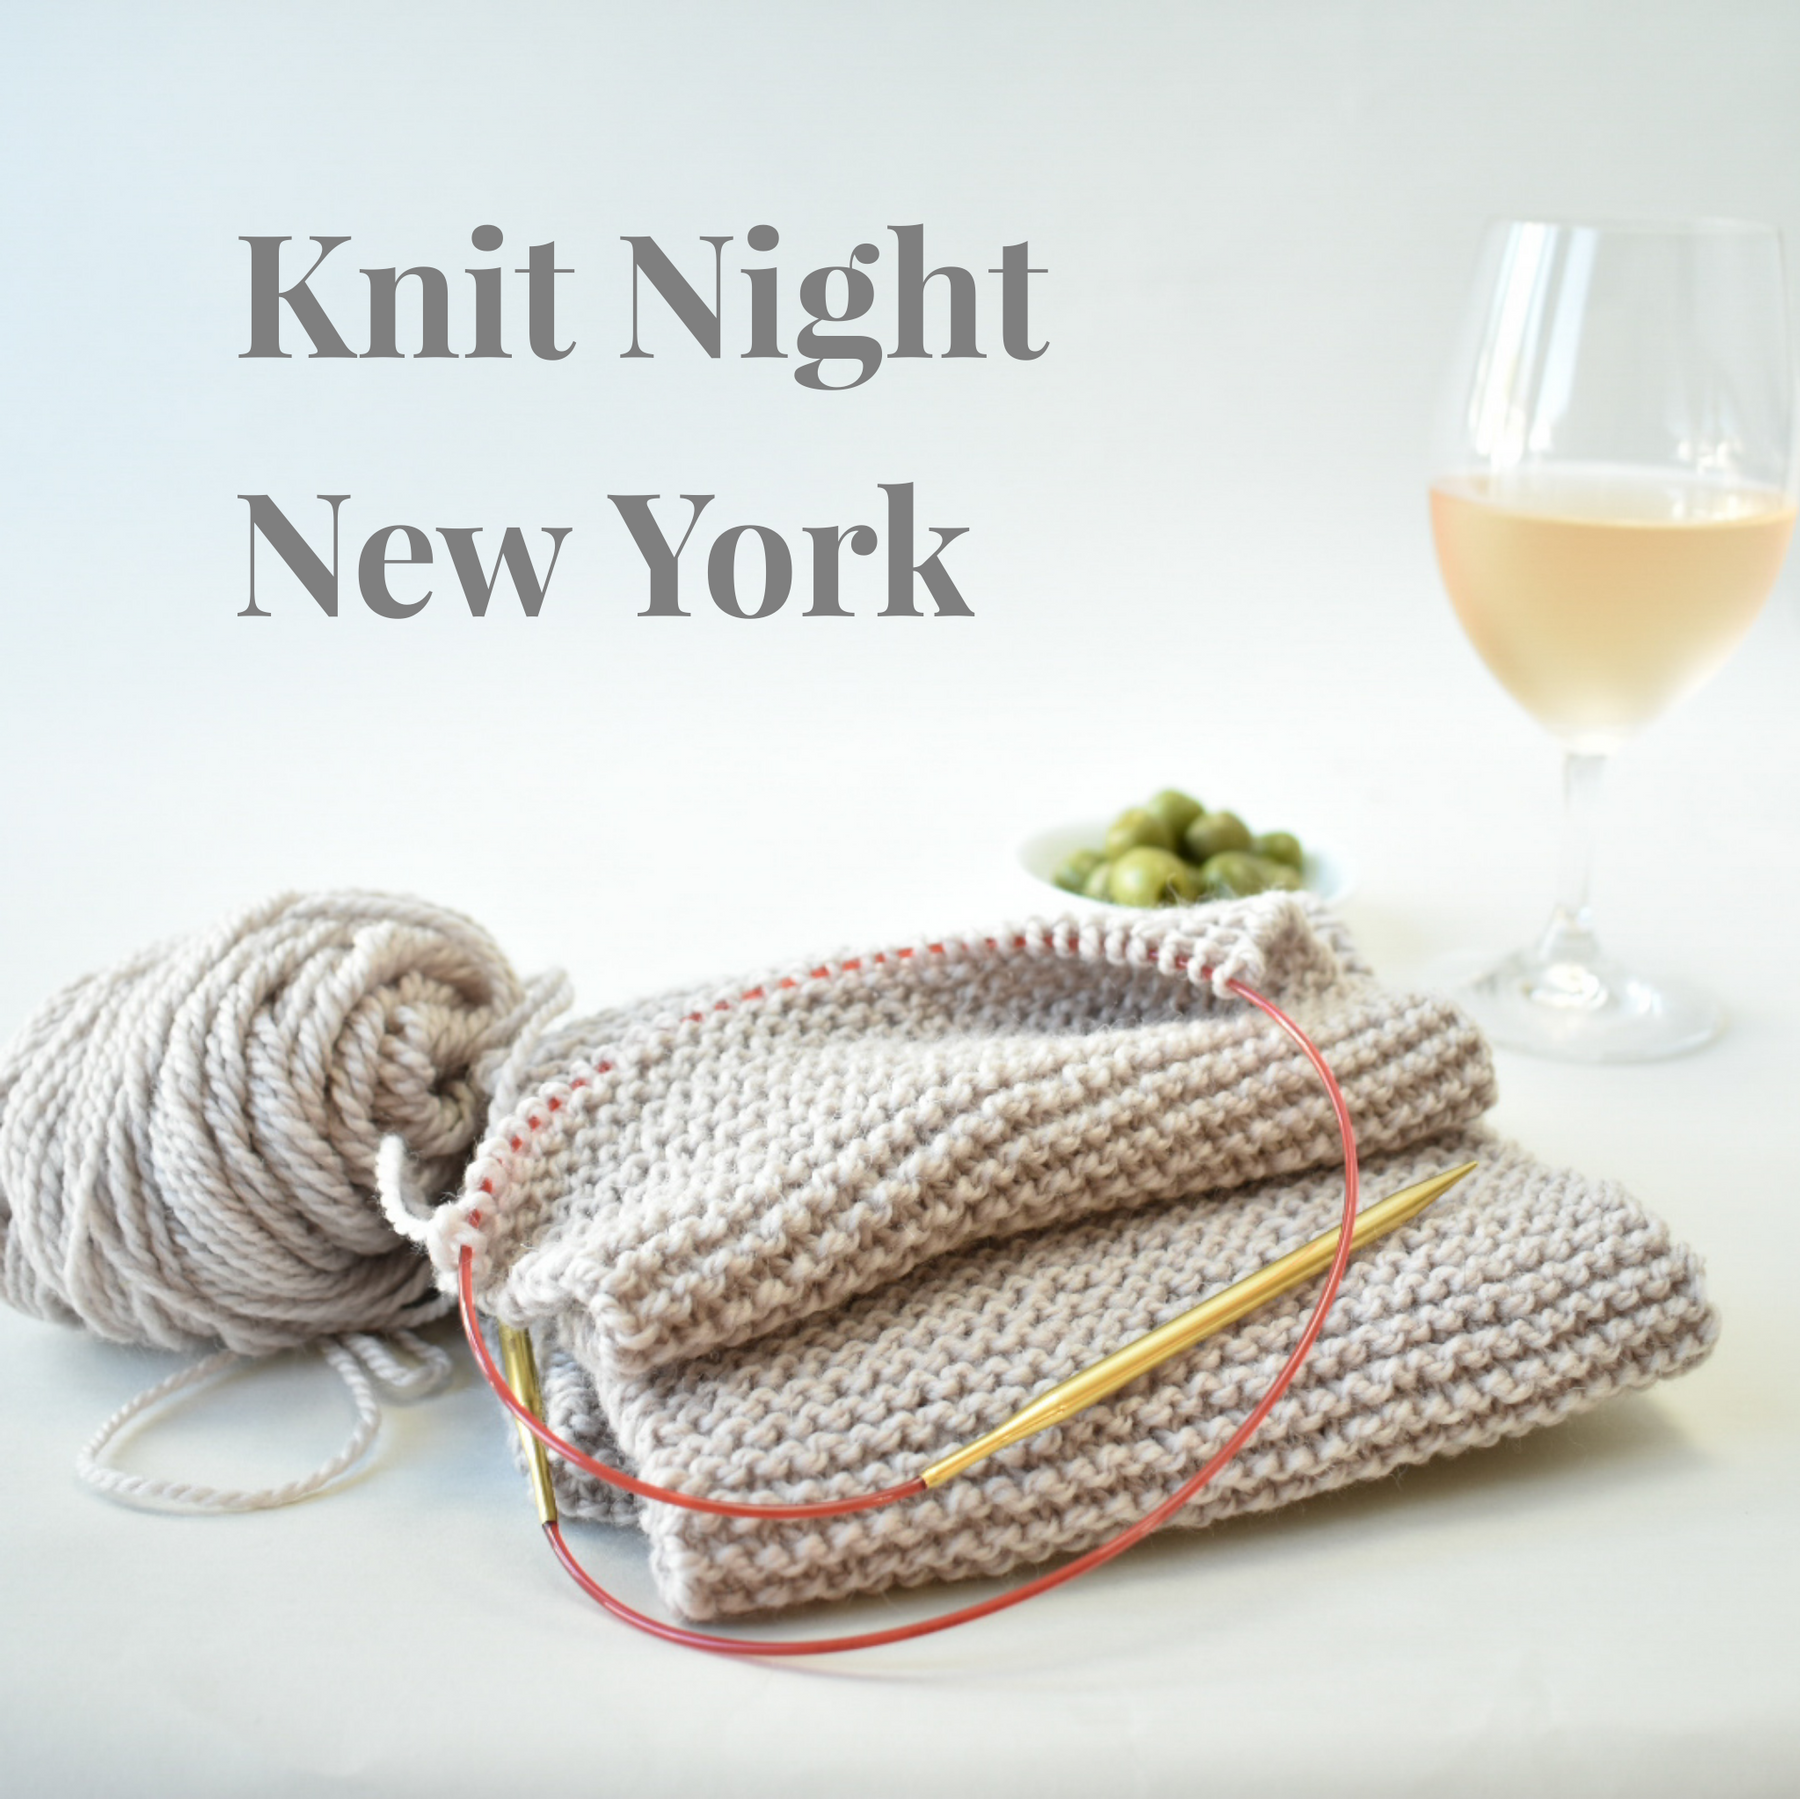 Knit Night January 29th - NYC